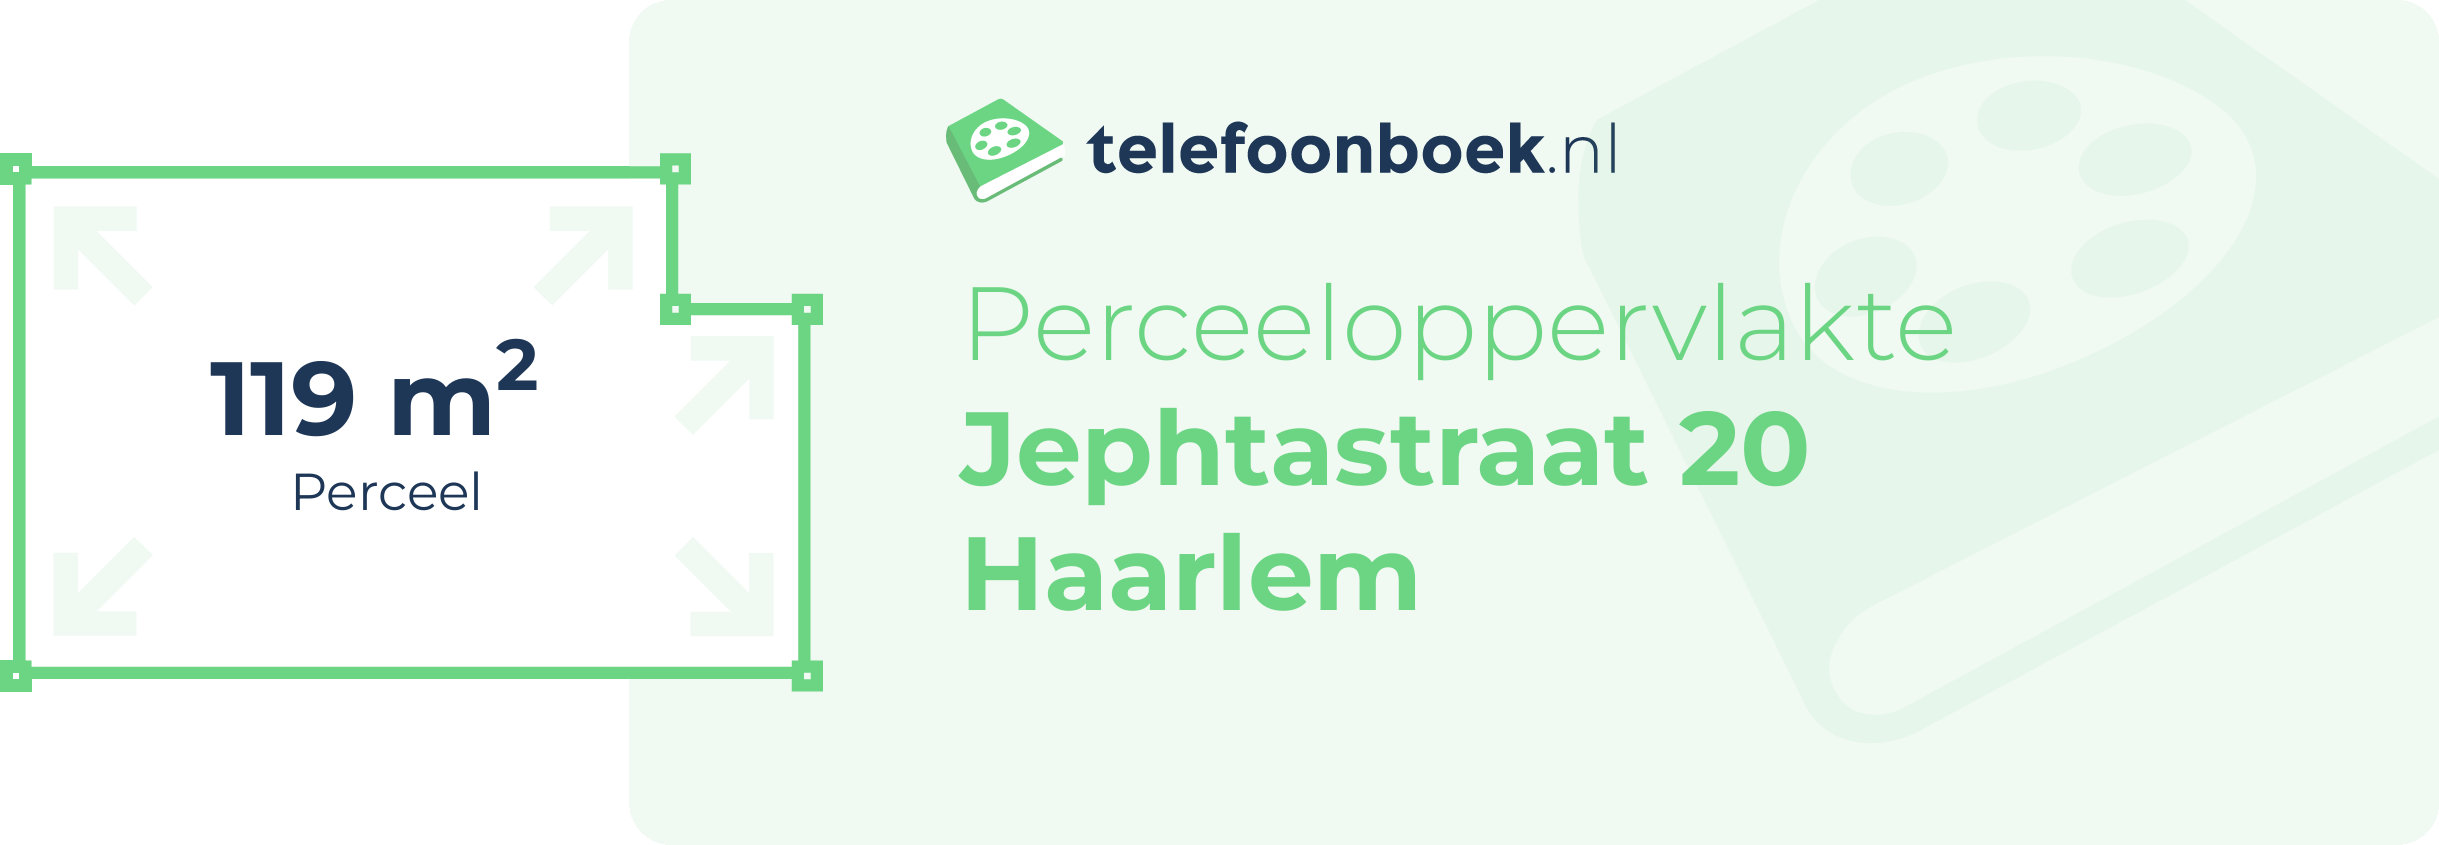 Perceeloppervlakte Jephtastraat 20 Haarlem